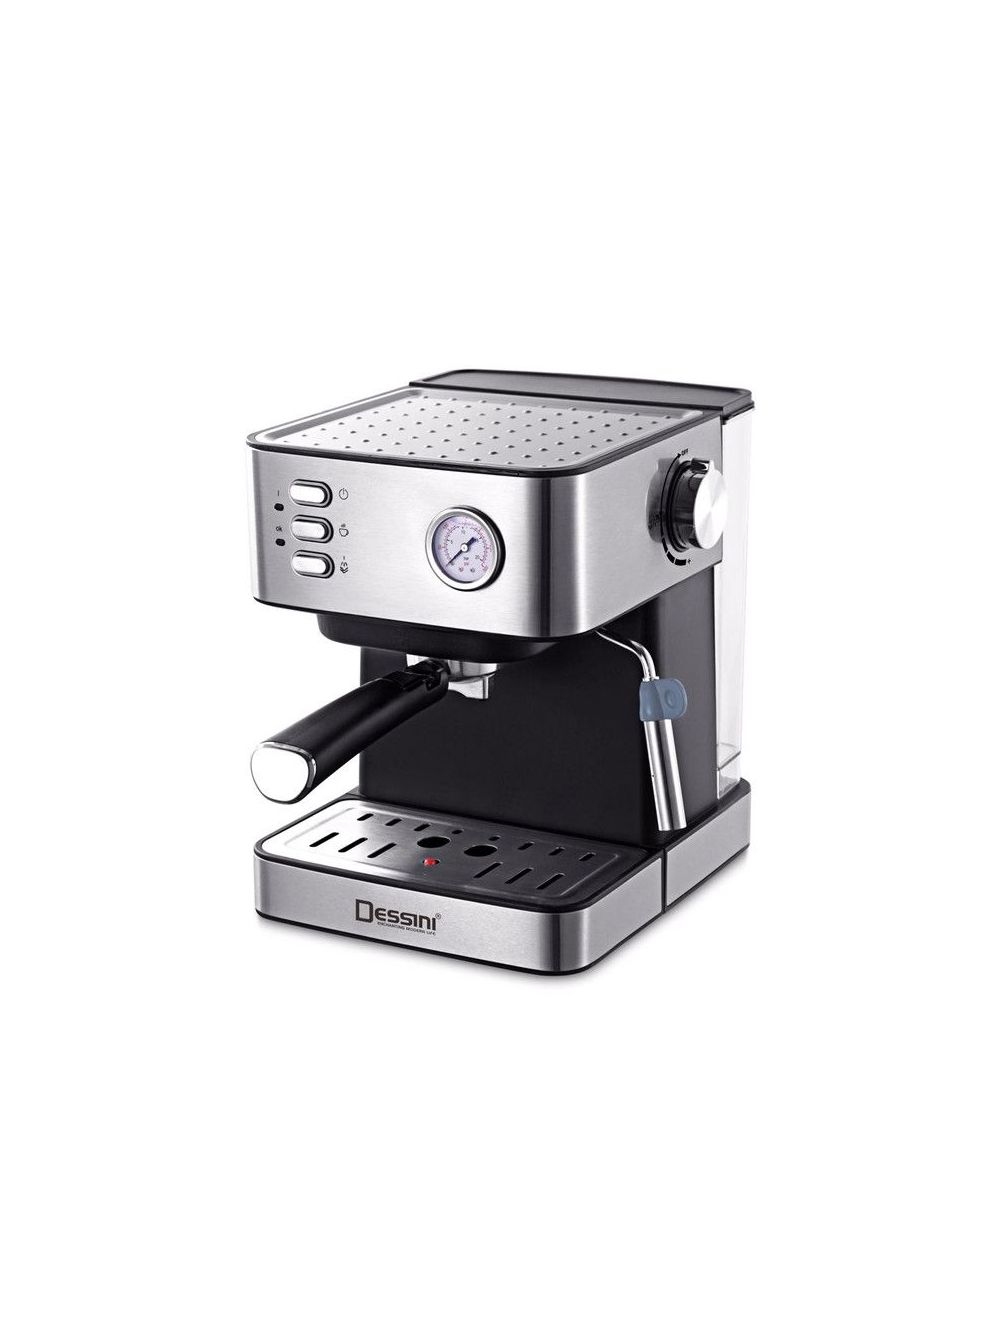 Dessini High Quality Automatic Espresso Machine 850W 15 BARS-AKAT145